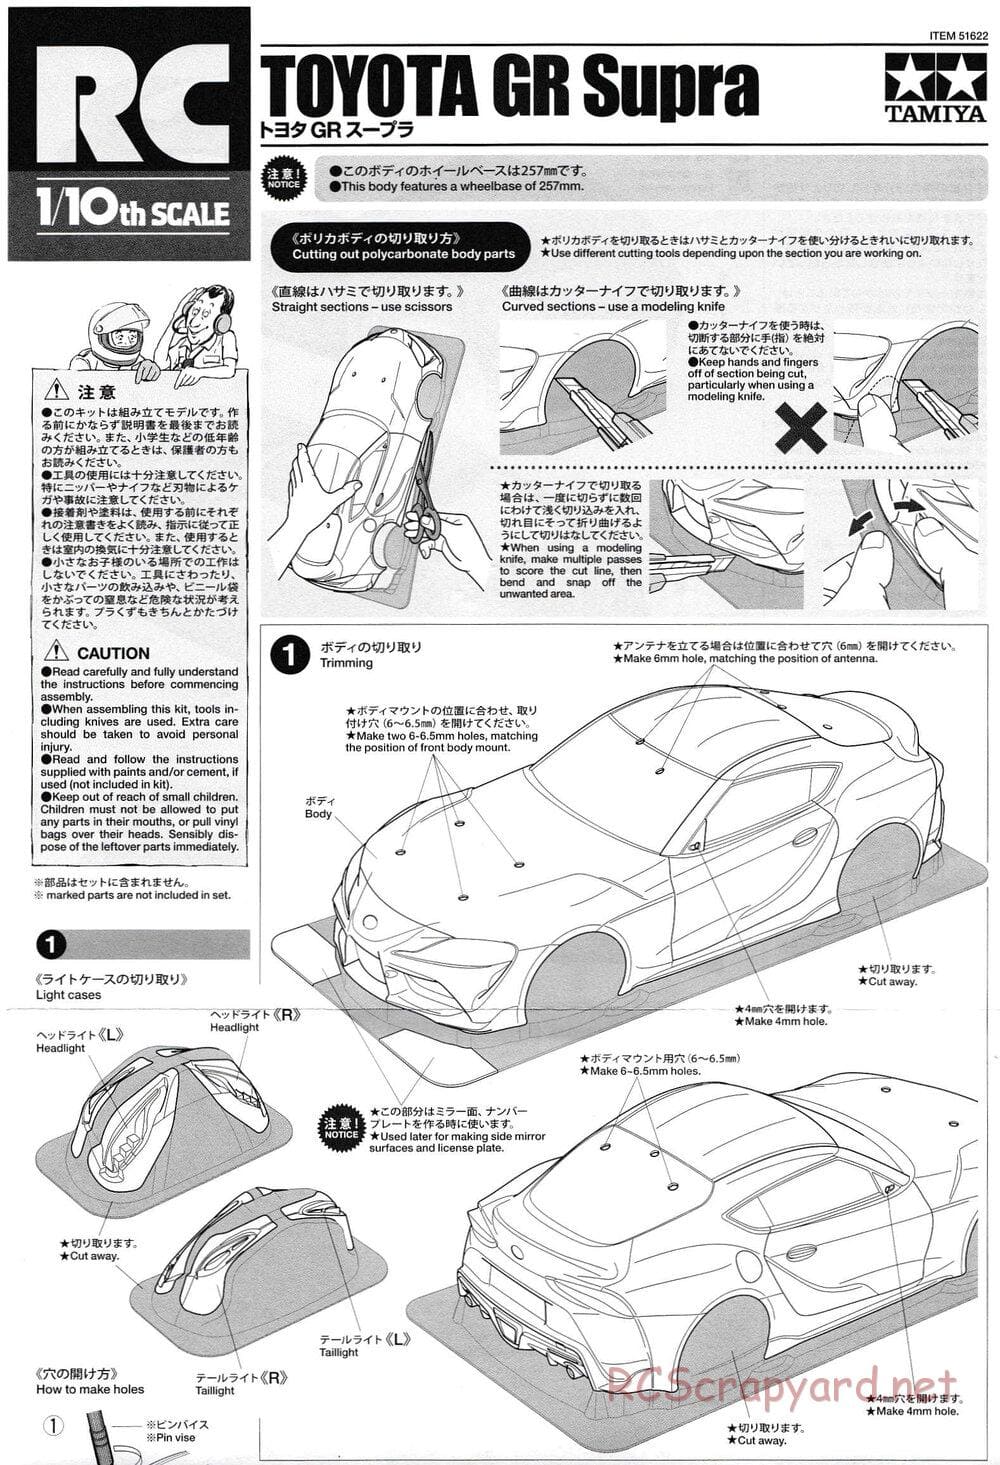 Tamiya - Toyota GR Supra - TT-02 Chassis - Body Manual - Page 1